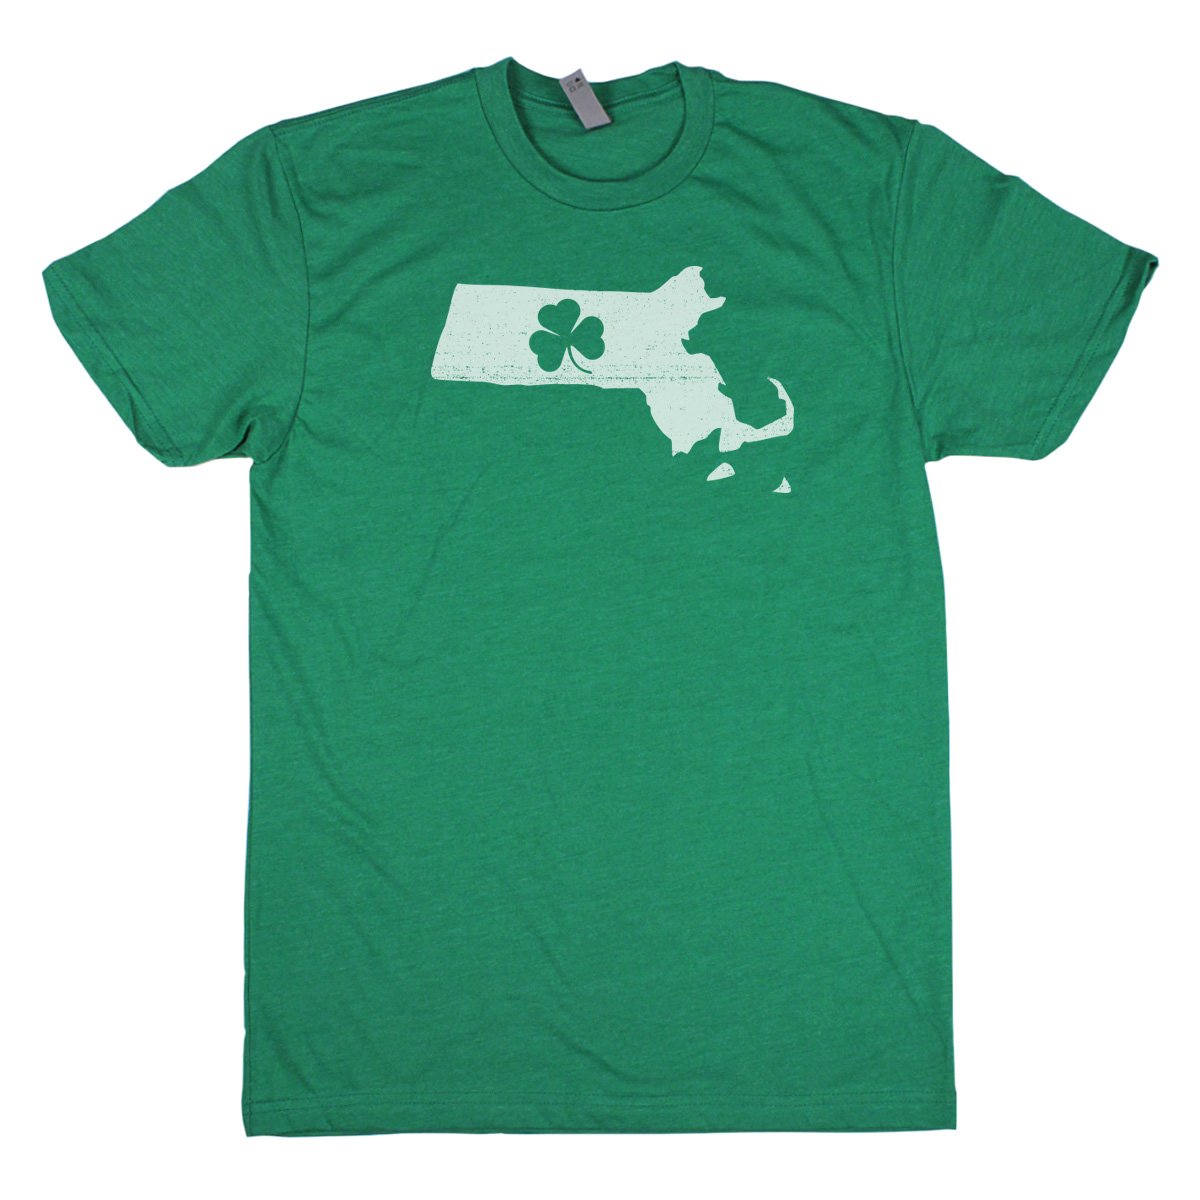 Shamrock Men's Unisex T-Shirt - North Carolina